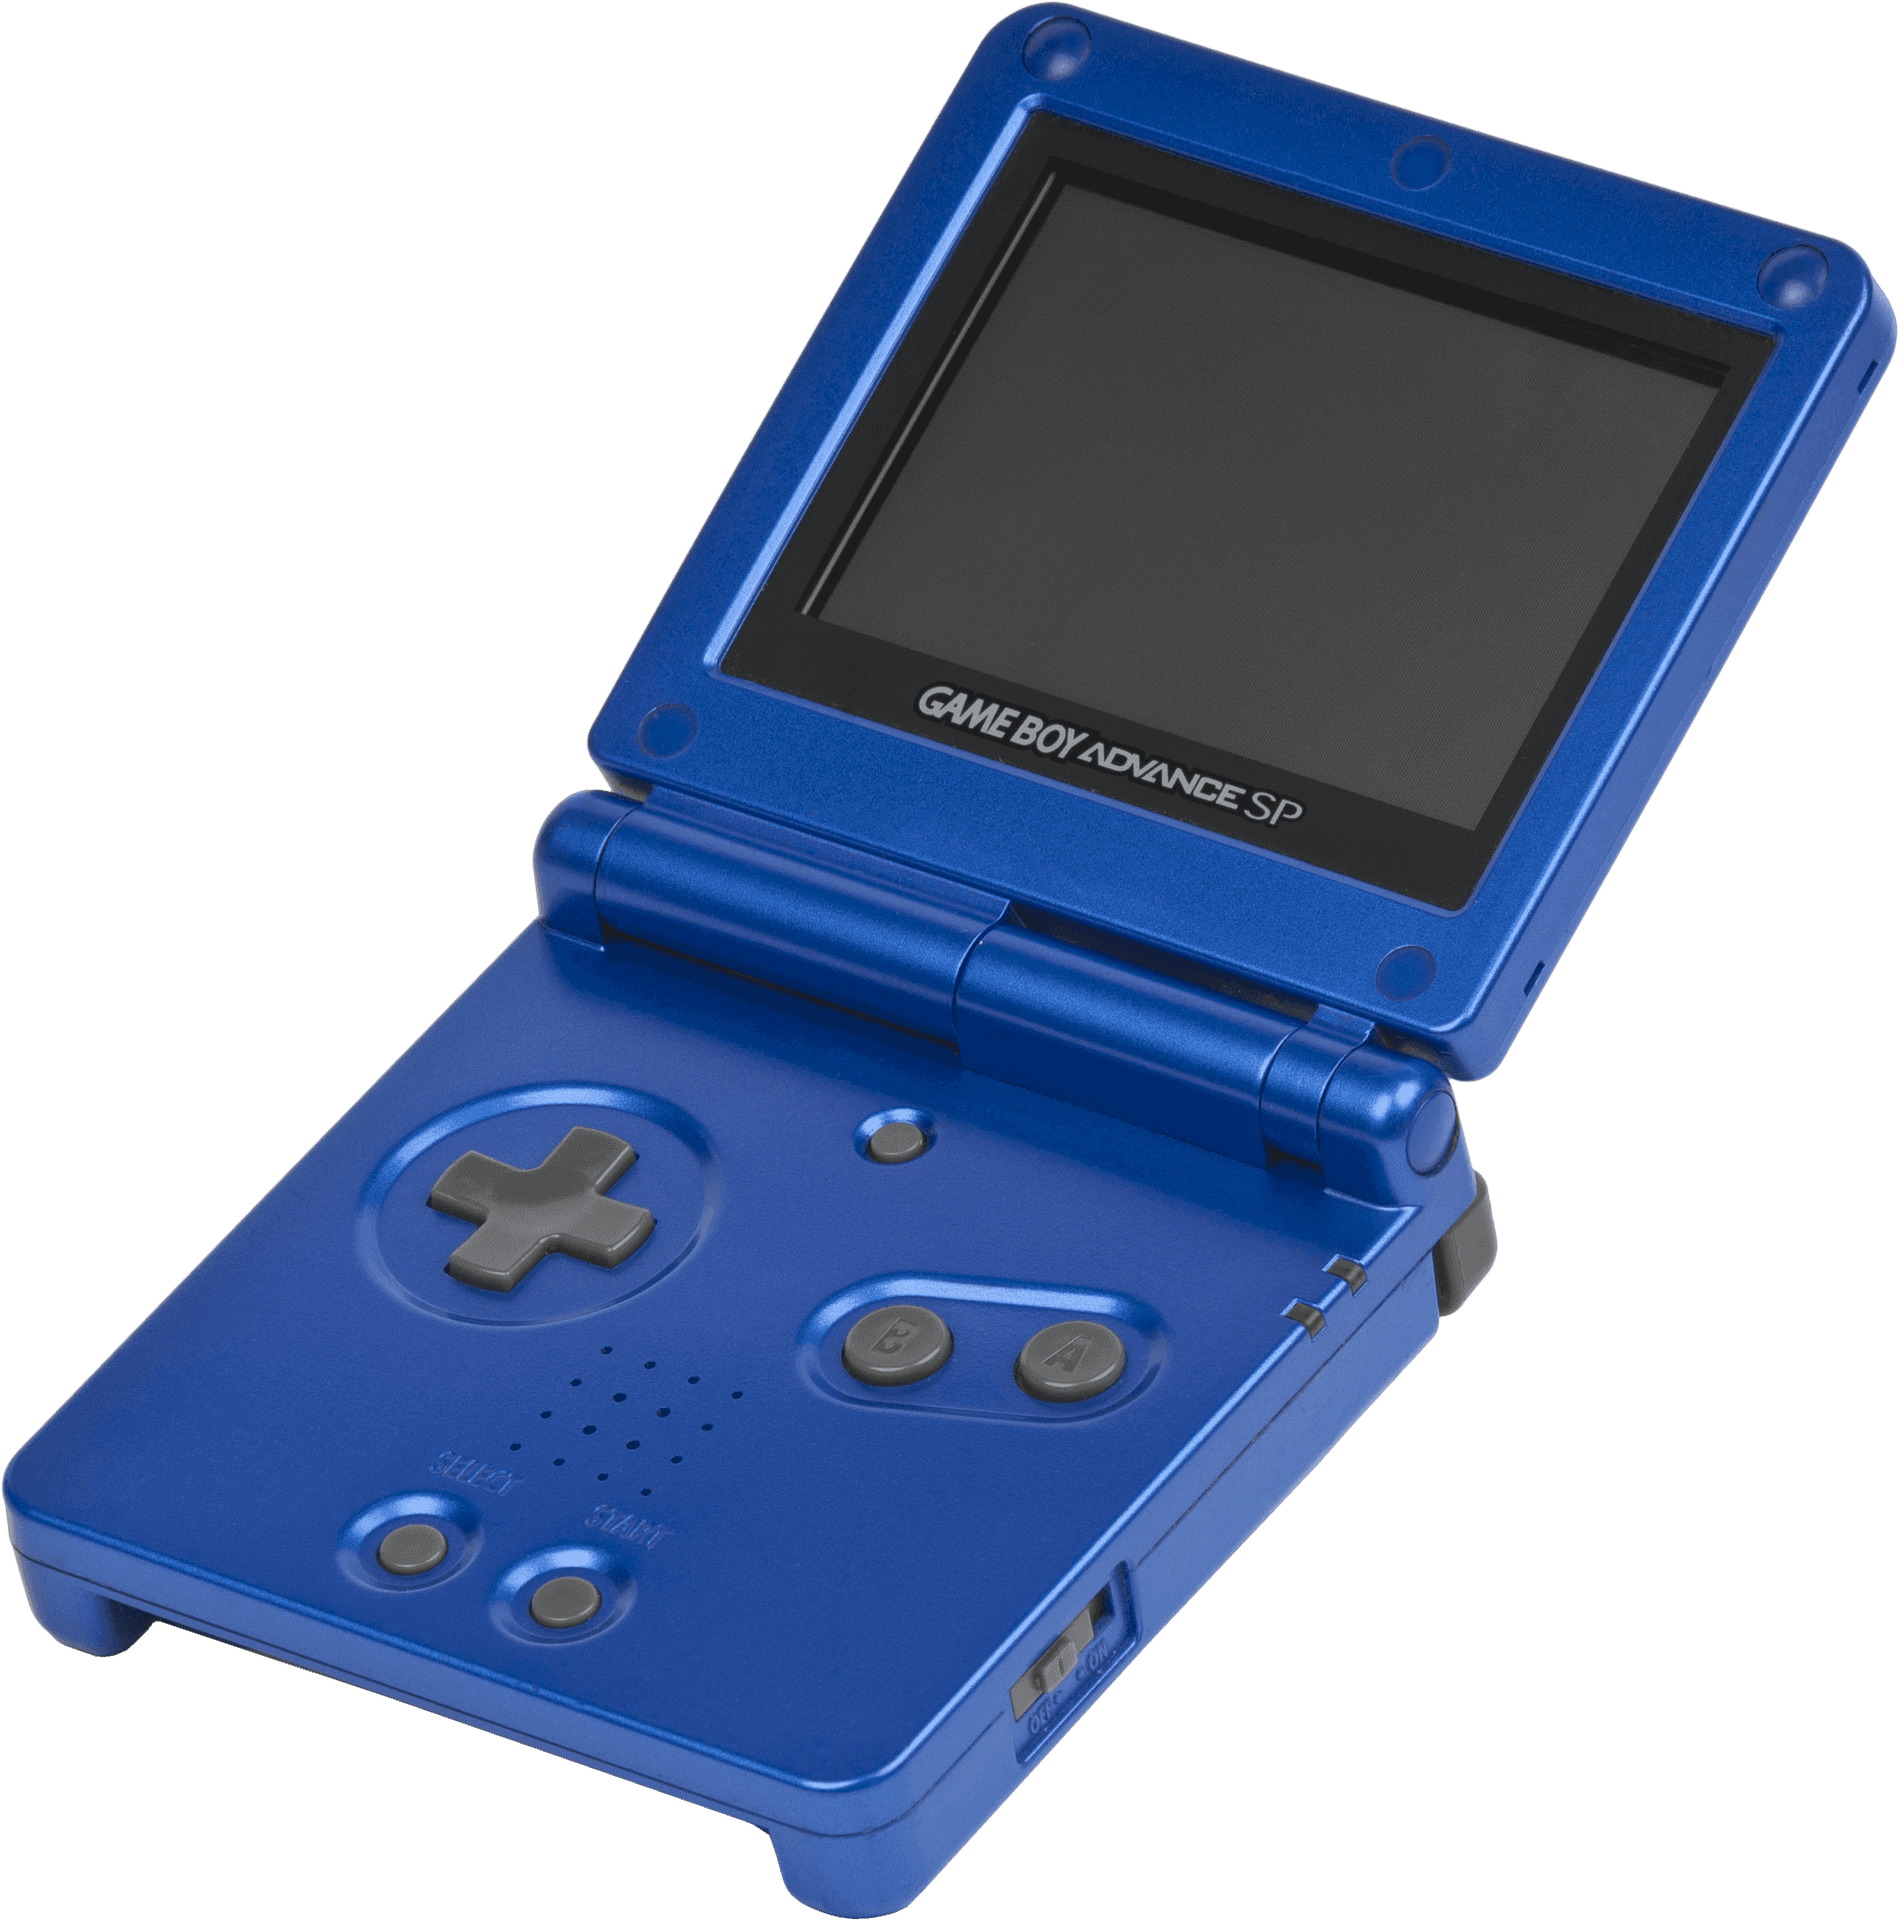 Blue Game Boy Advance S P PNG